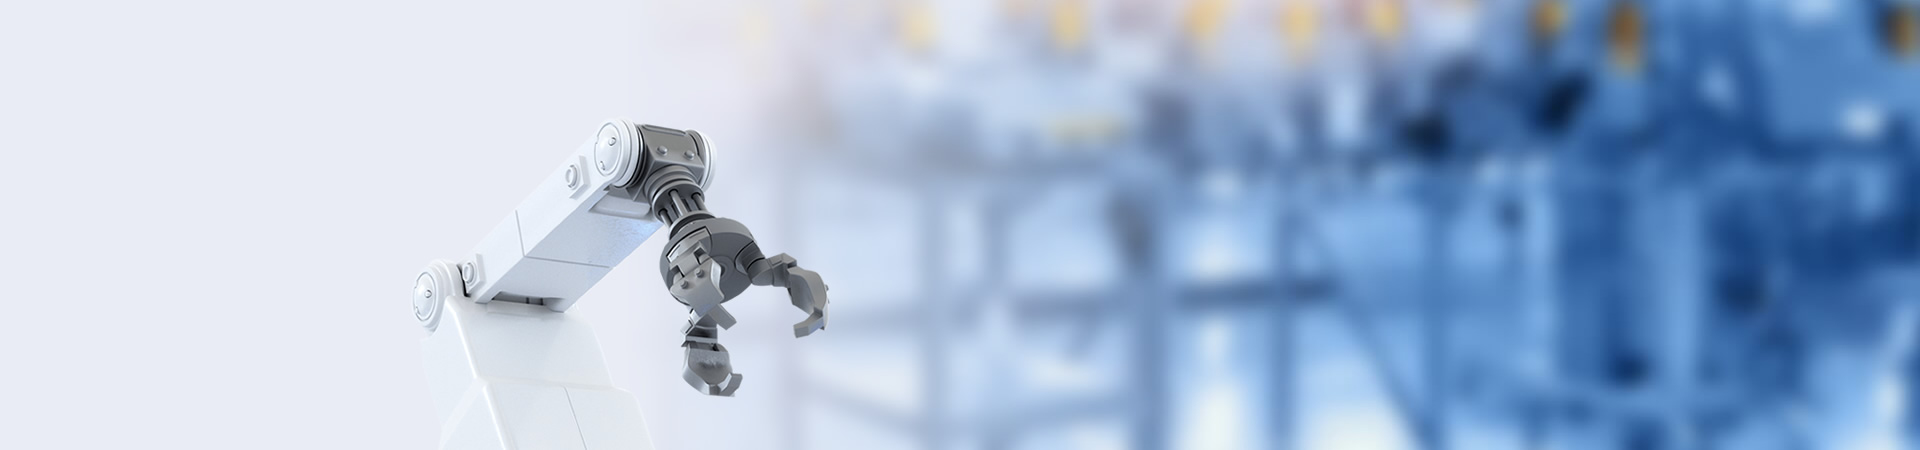 Tinsmith Módulo de articulación de brazo robótico BLDC de alto par Actuador Cobot eléctrico sin escobillas Eje hueco Sin marco Motor de accionamiento armónico robótico servo DC impermeable delgado